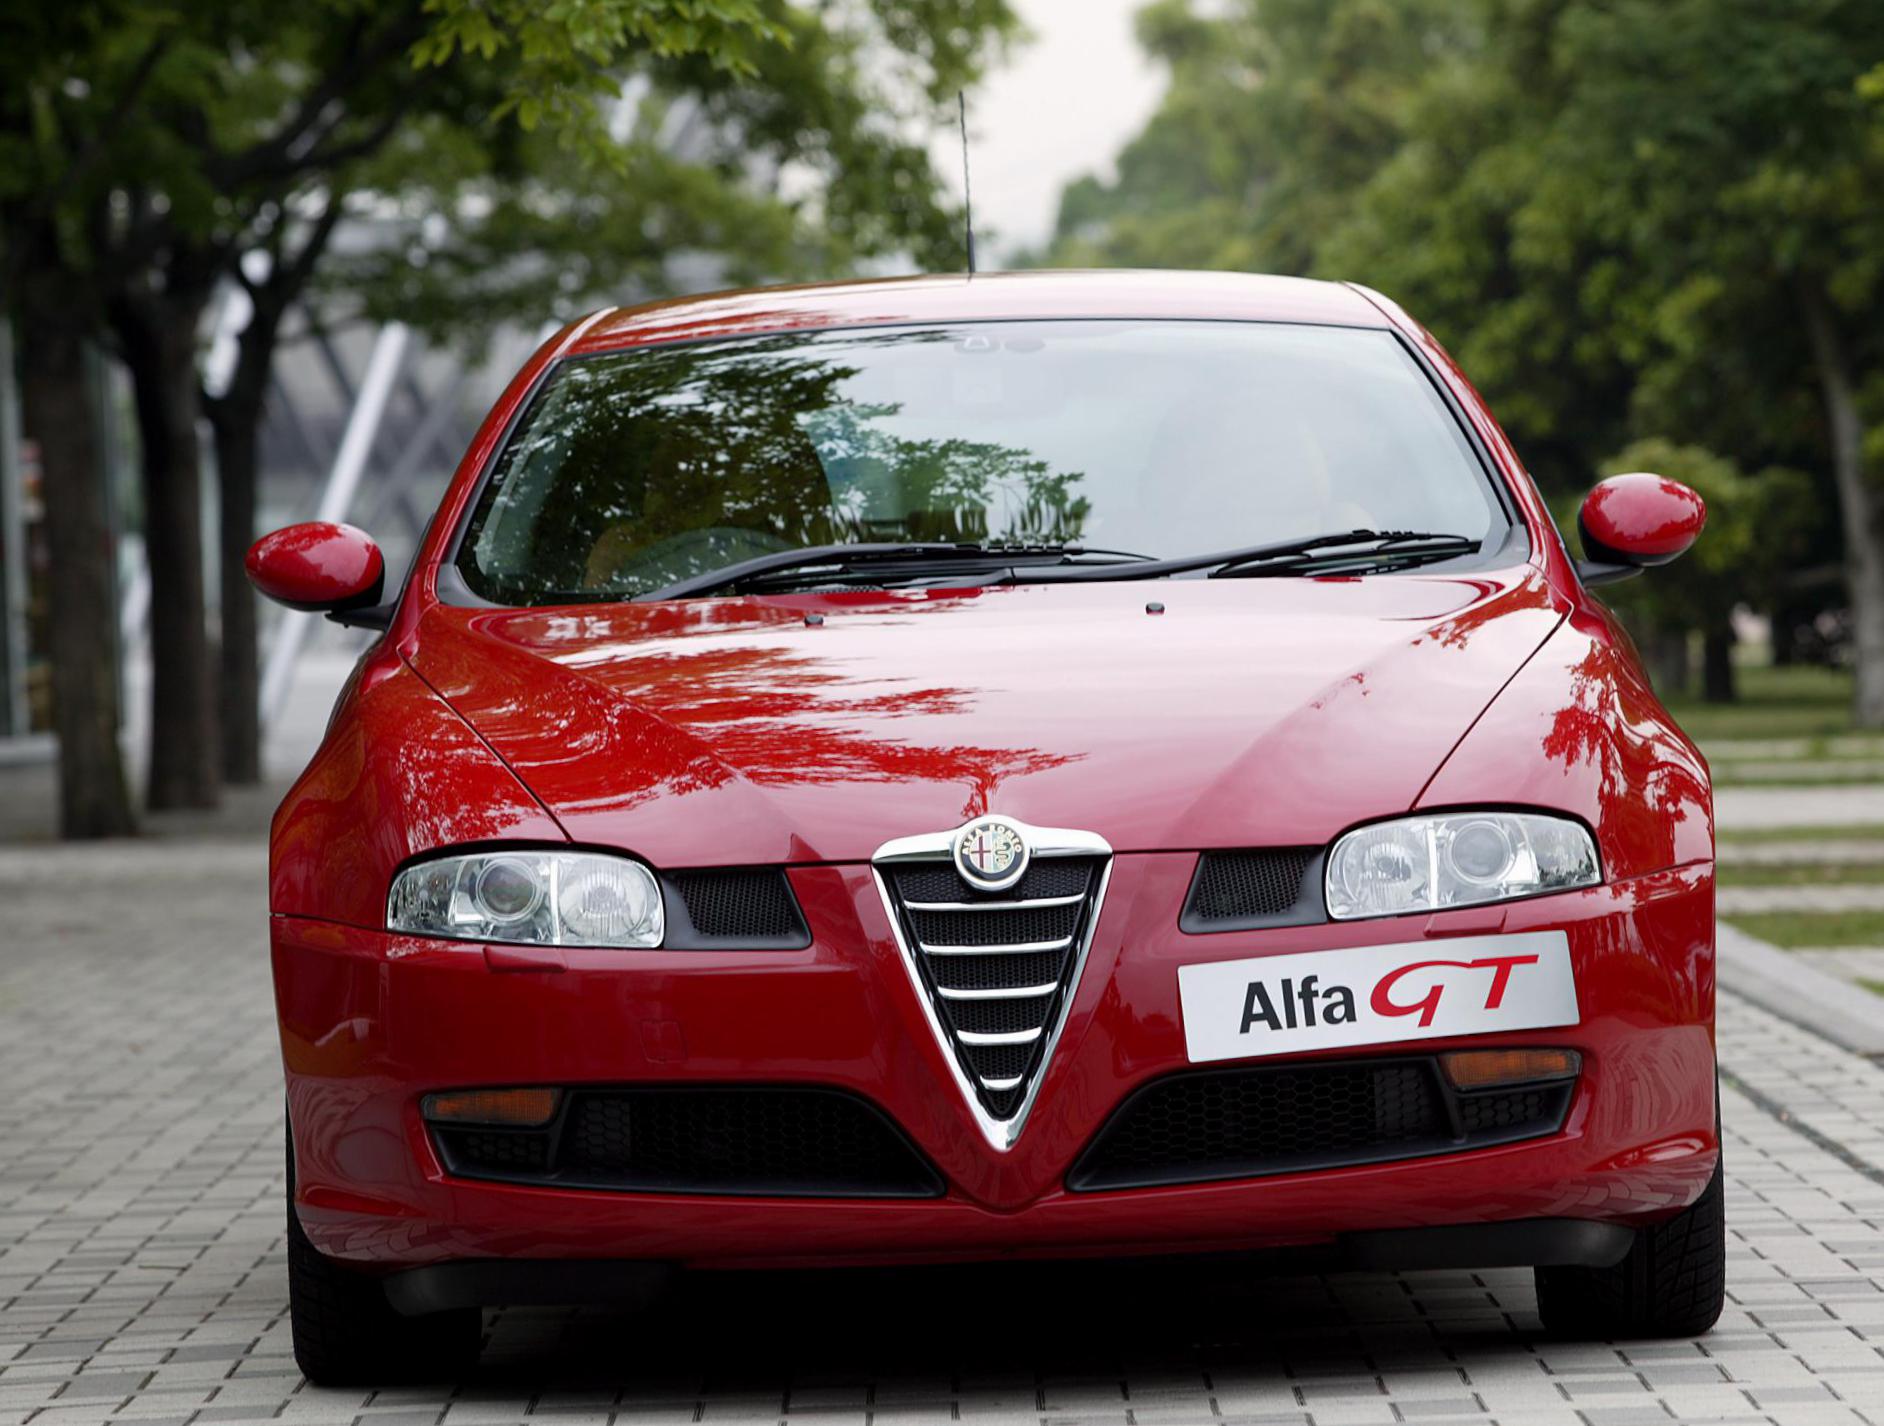 Alfa Romeo GT cost hatchback